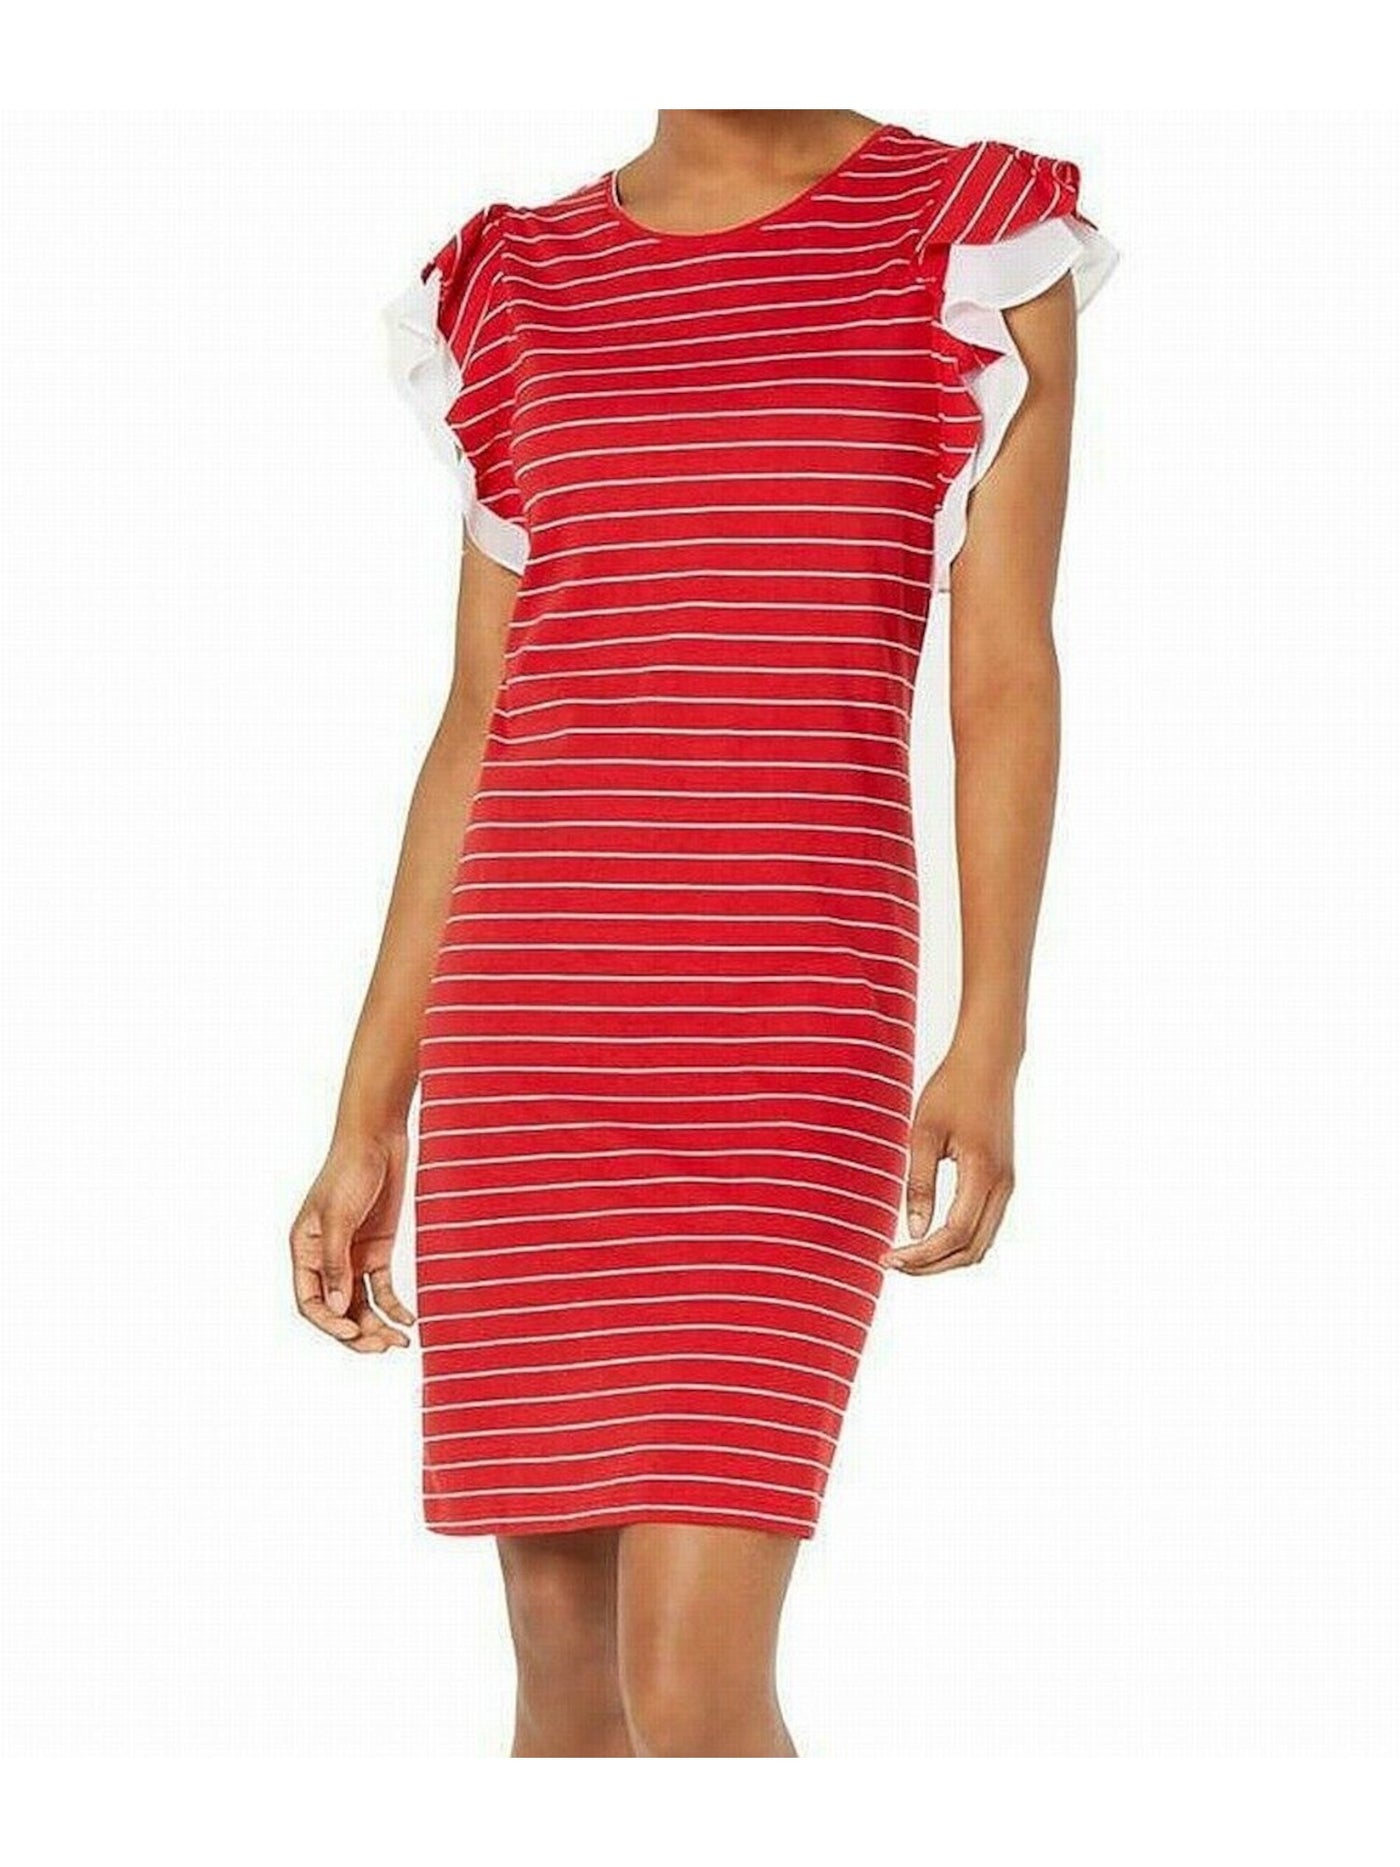 MAISON JULES Womens Red Ruffled Striped Short Sleeve Jewel Neck Above The Knee Shift Dress Juniors M